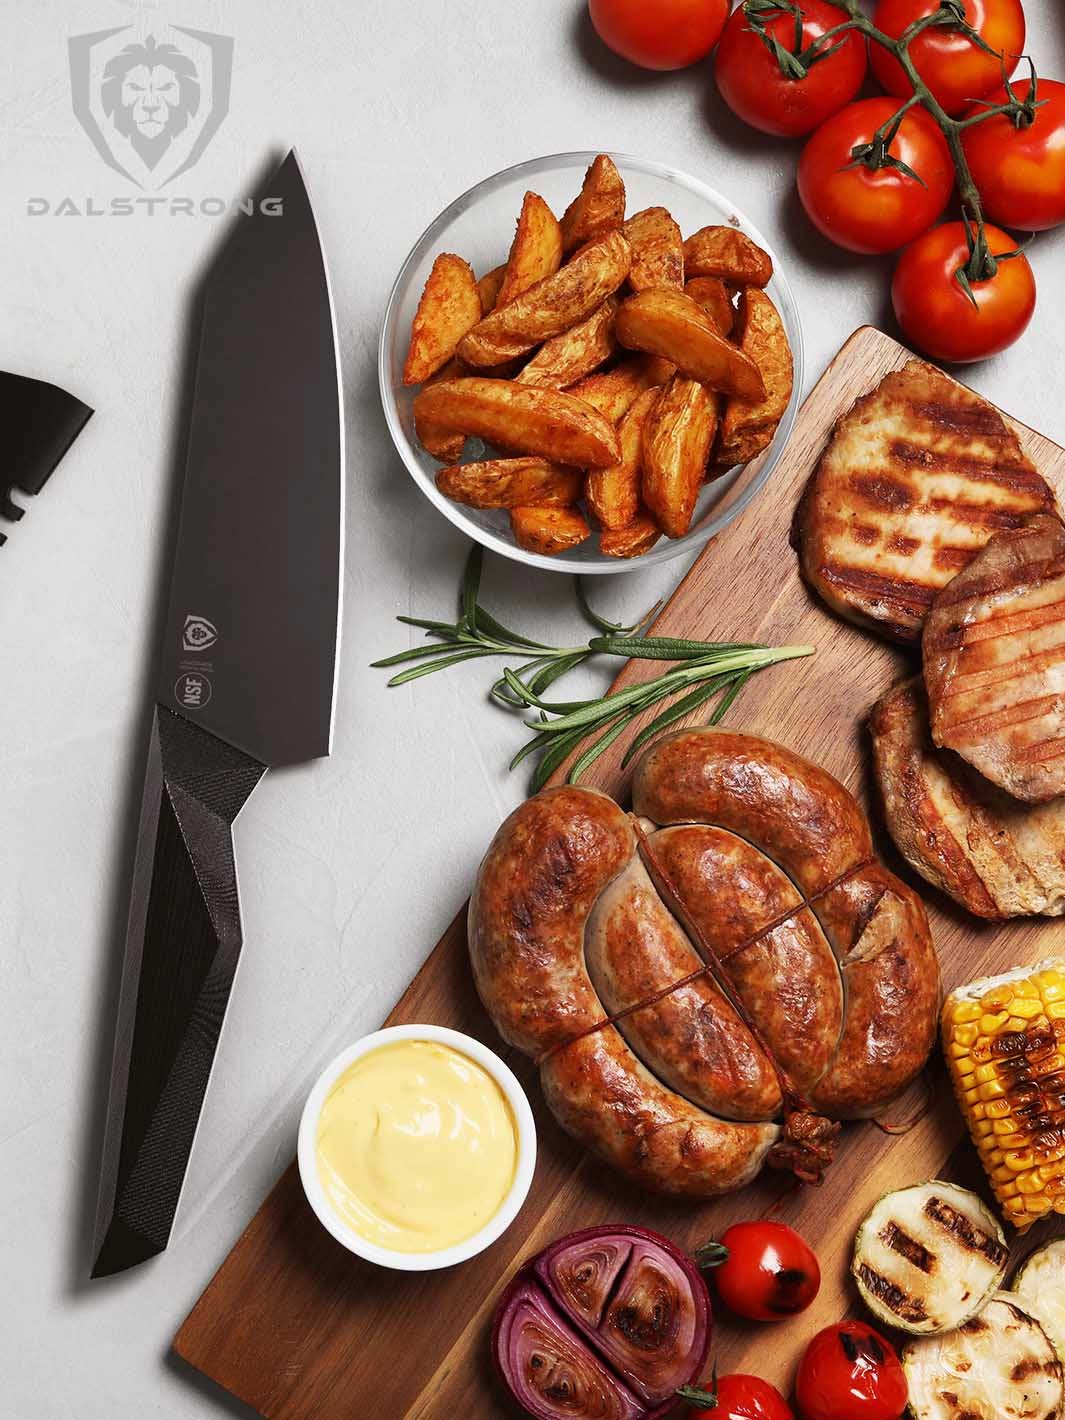 Melbourne Mutilator  Chef's Knife – Danaak & Co.